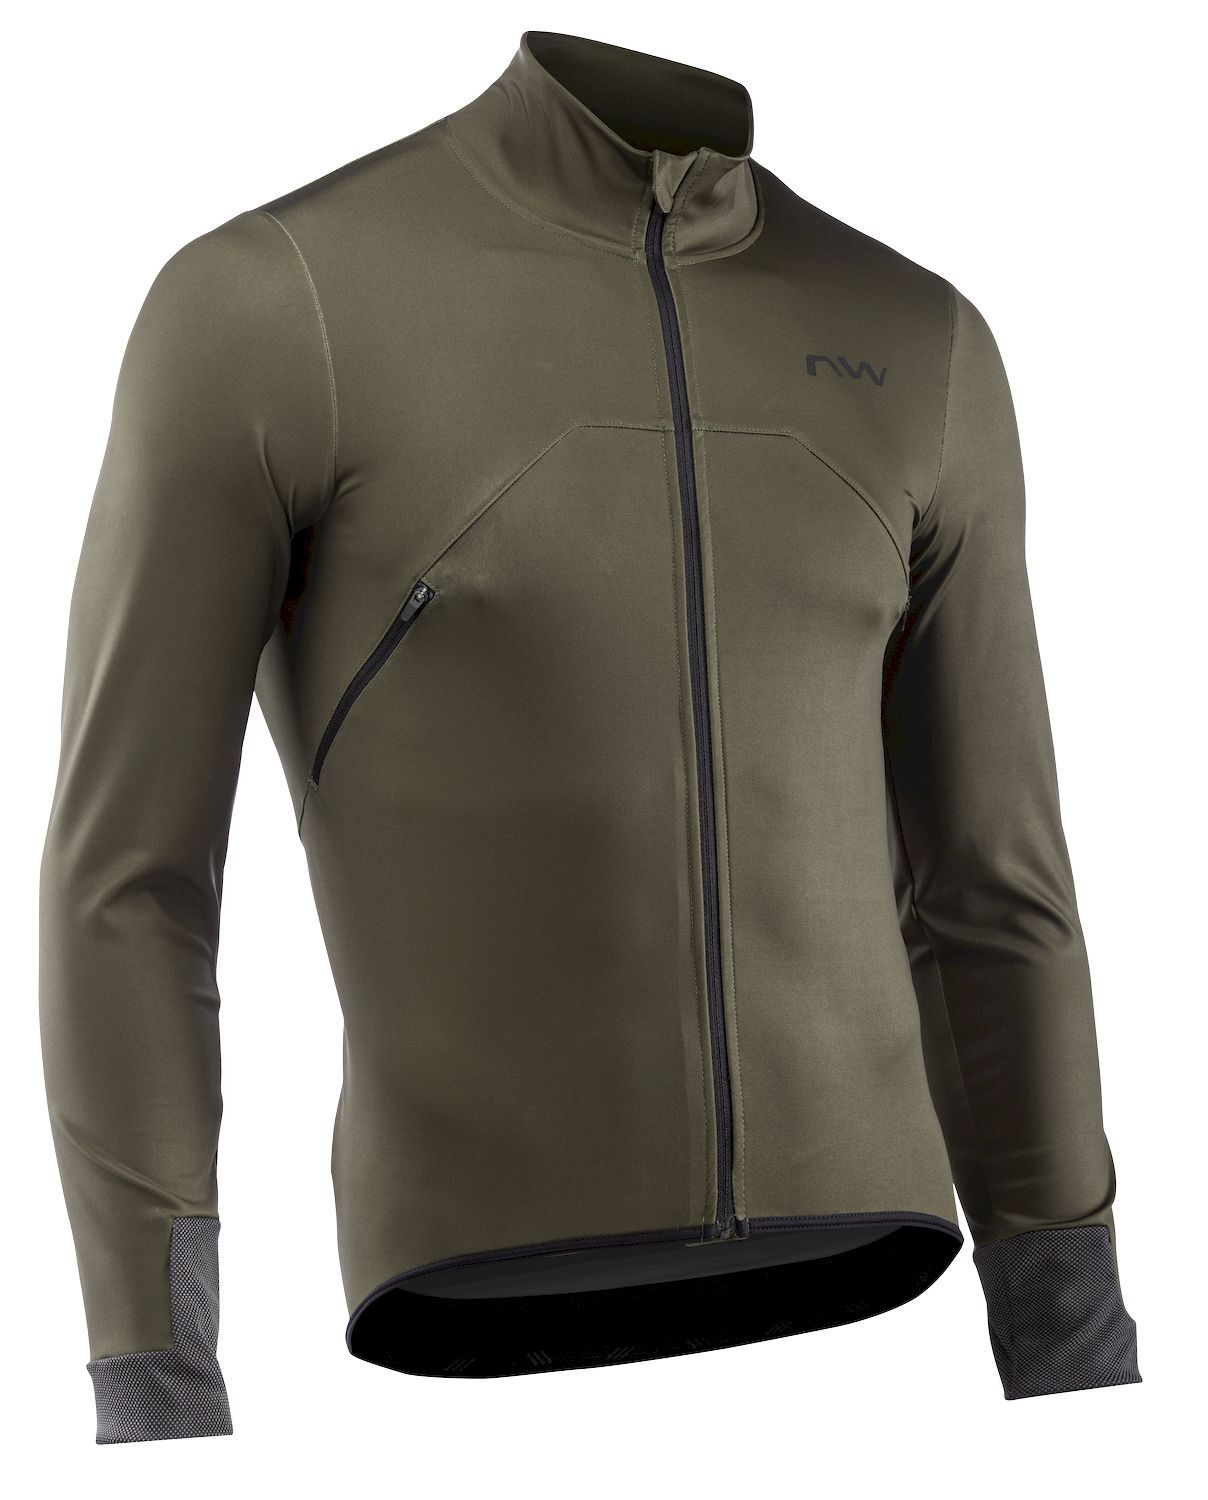 Northwave Extreme H20 2 Jacket - Cycling jacket - Men's